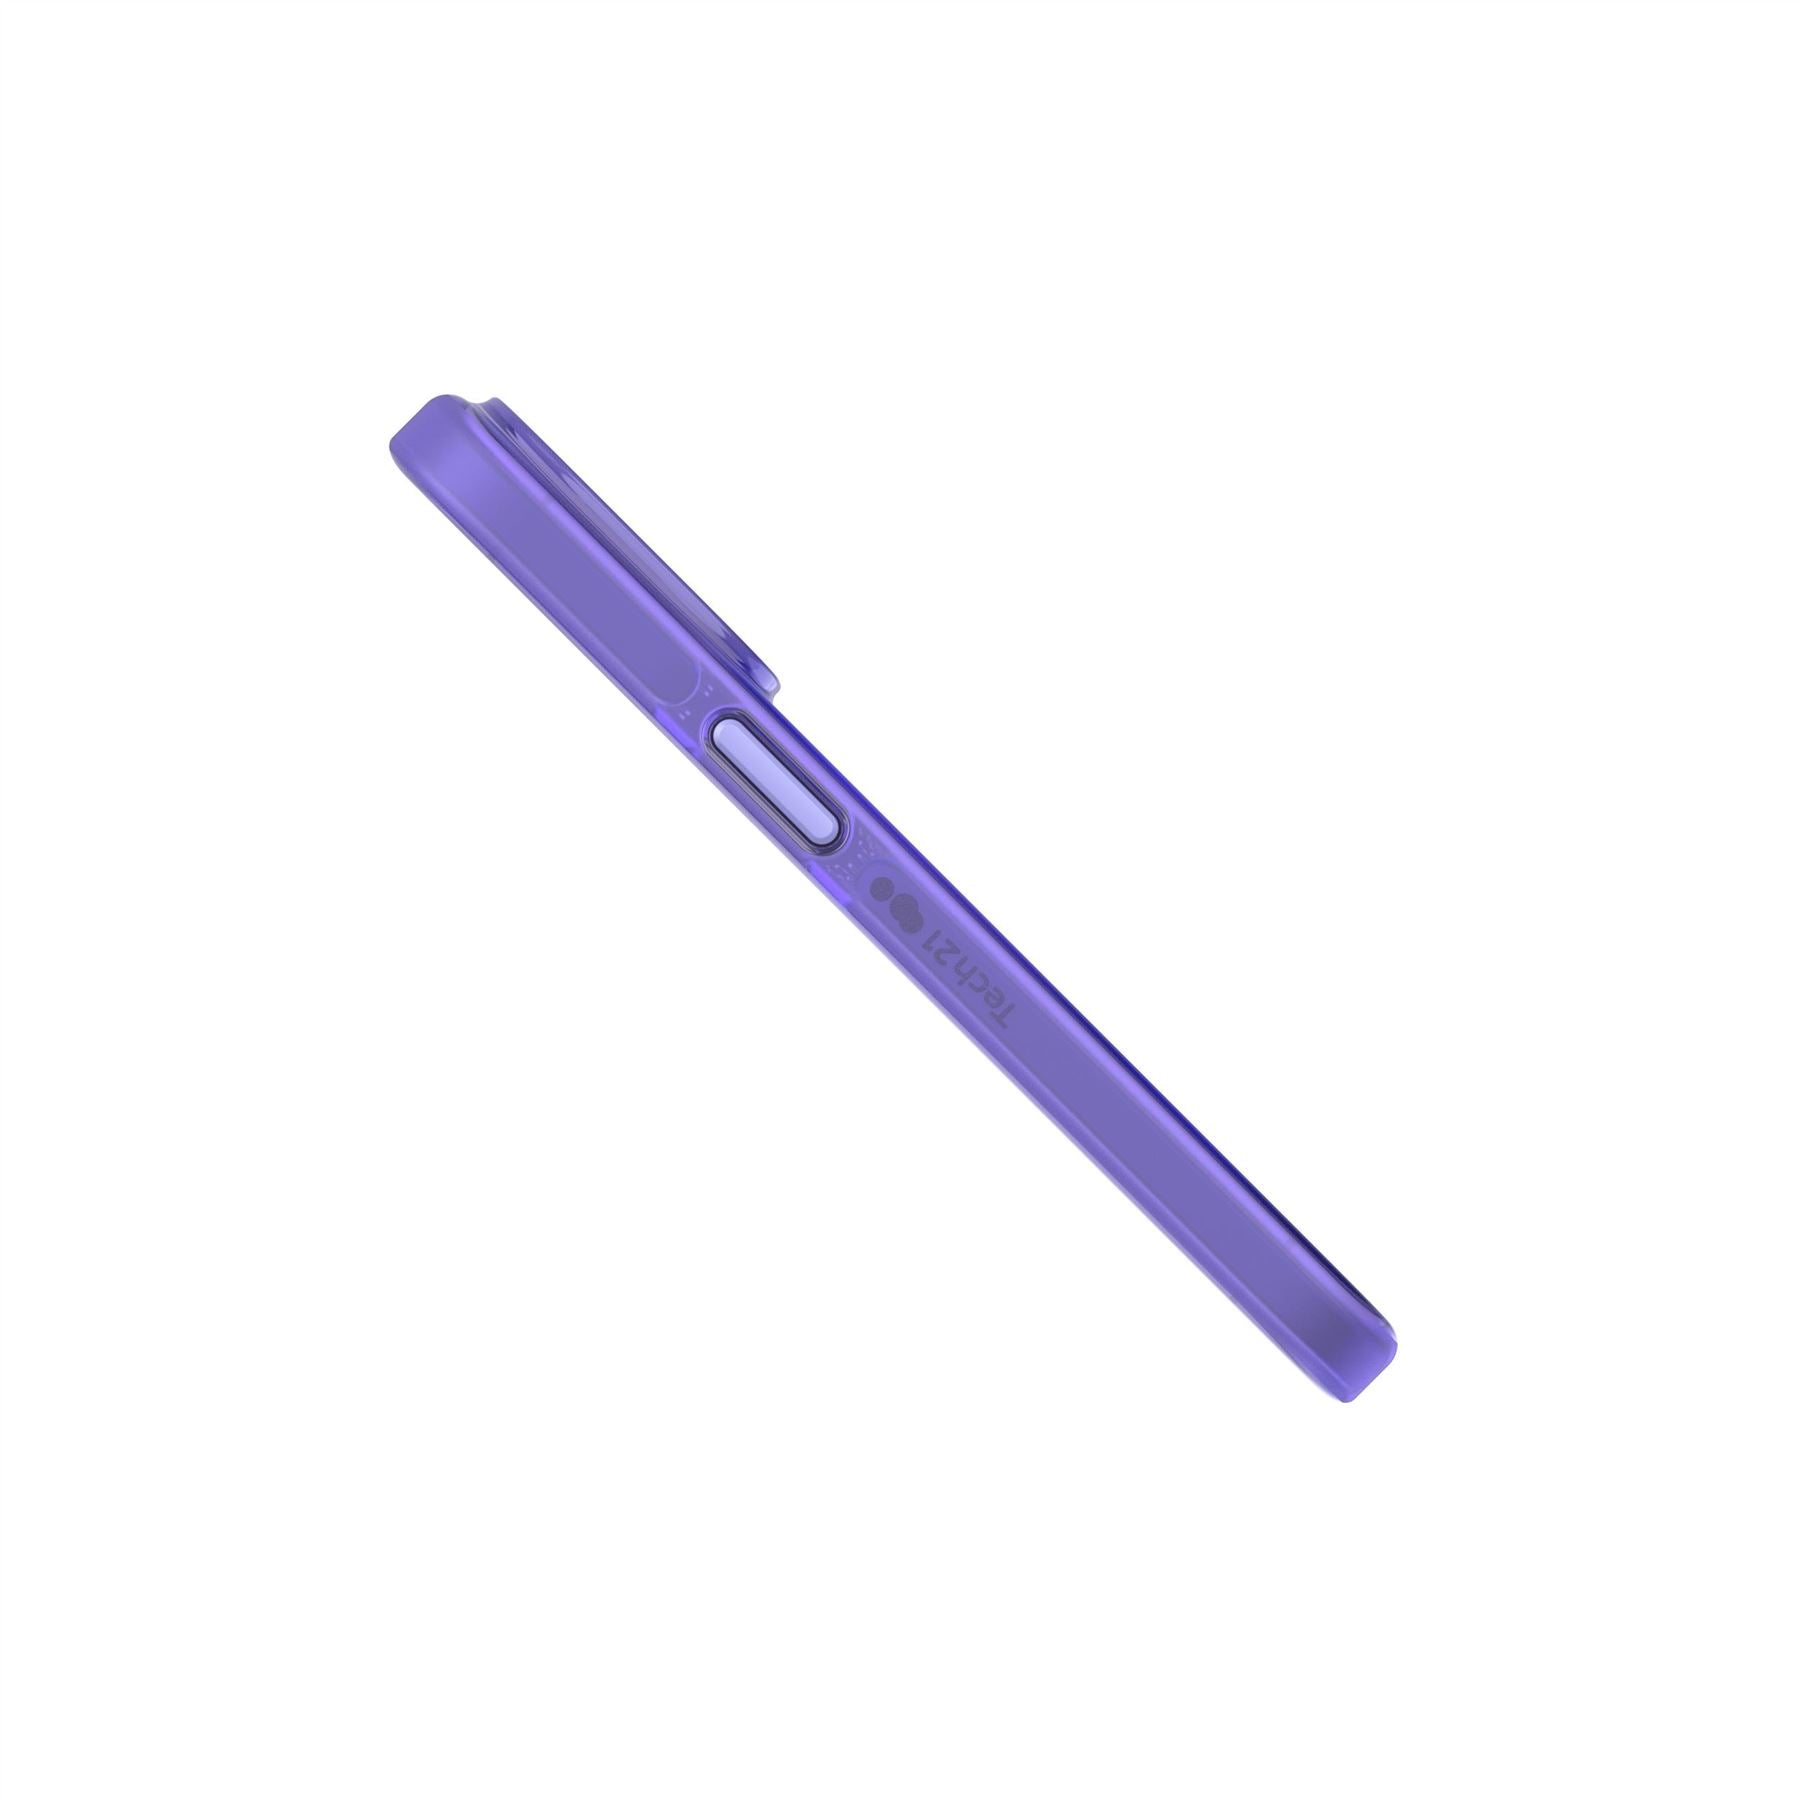 Evo Check - Apple iPhone 14 Pro Case MagSafe® Compatible - Wondrous Purple